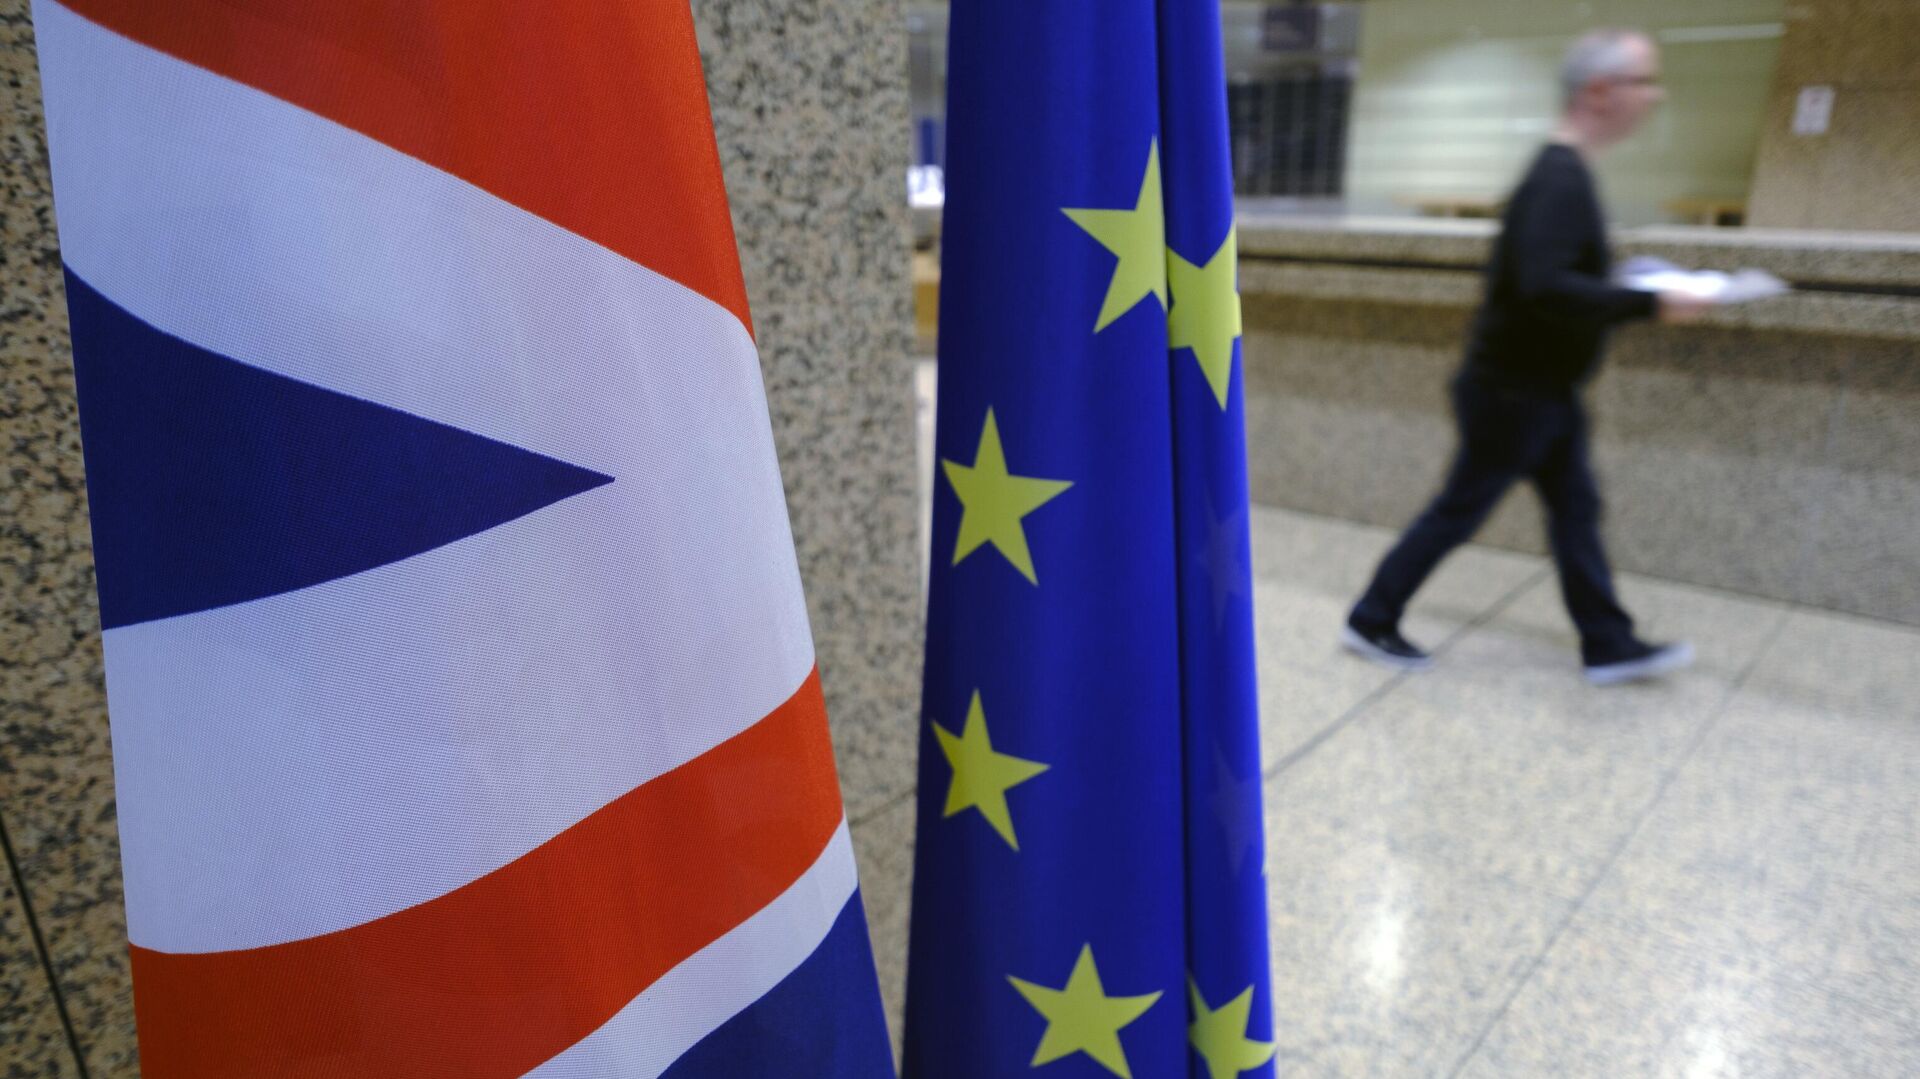 Флаги Великобритании и Евросоюза в здании Европарламента в Брюсселе - РИА Новости, 1920, 24.12.2020